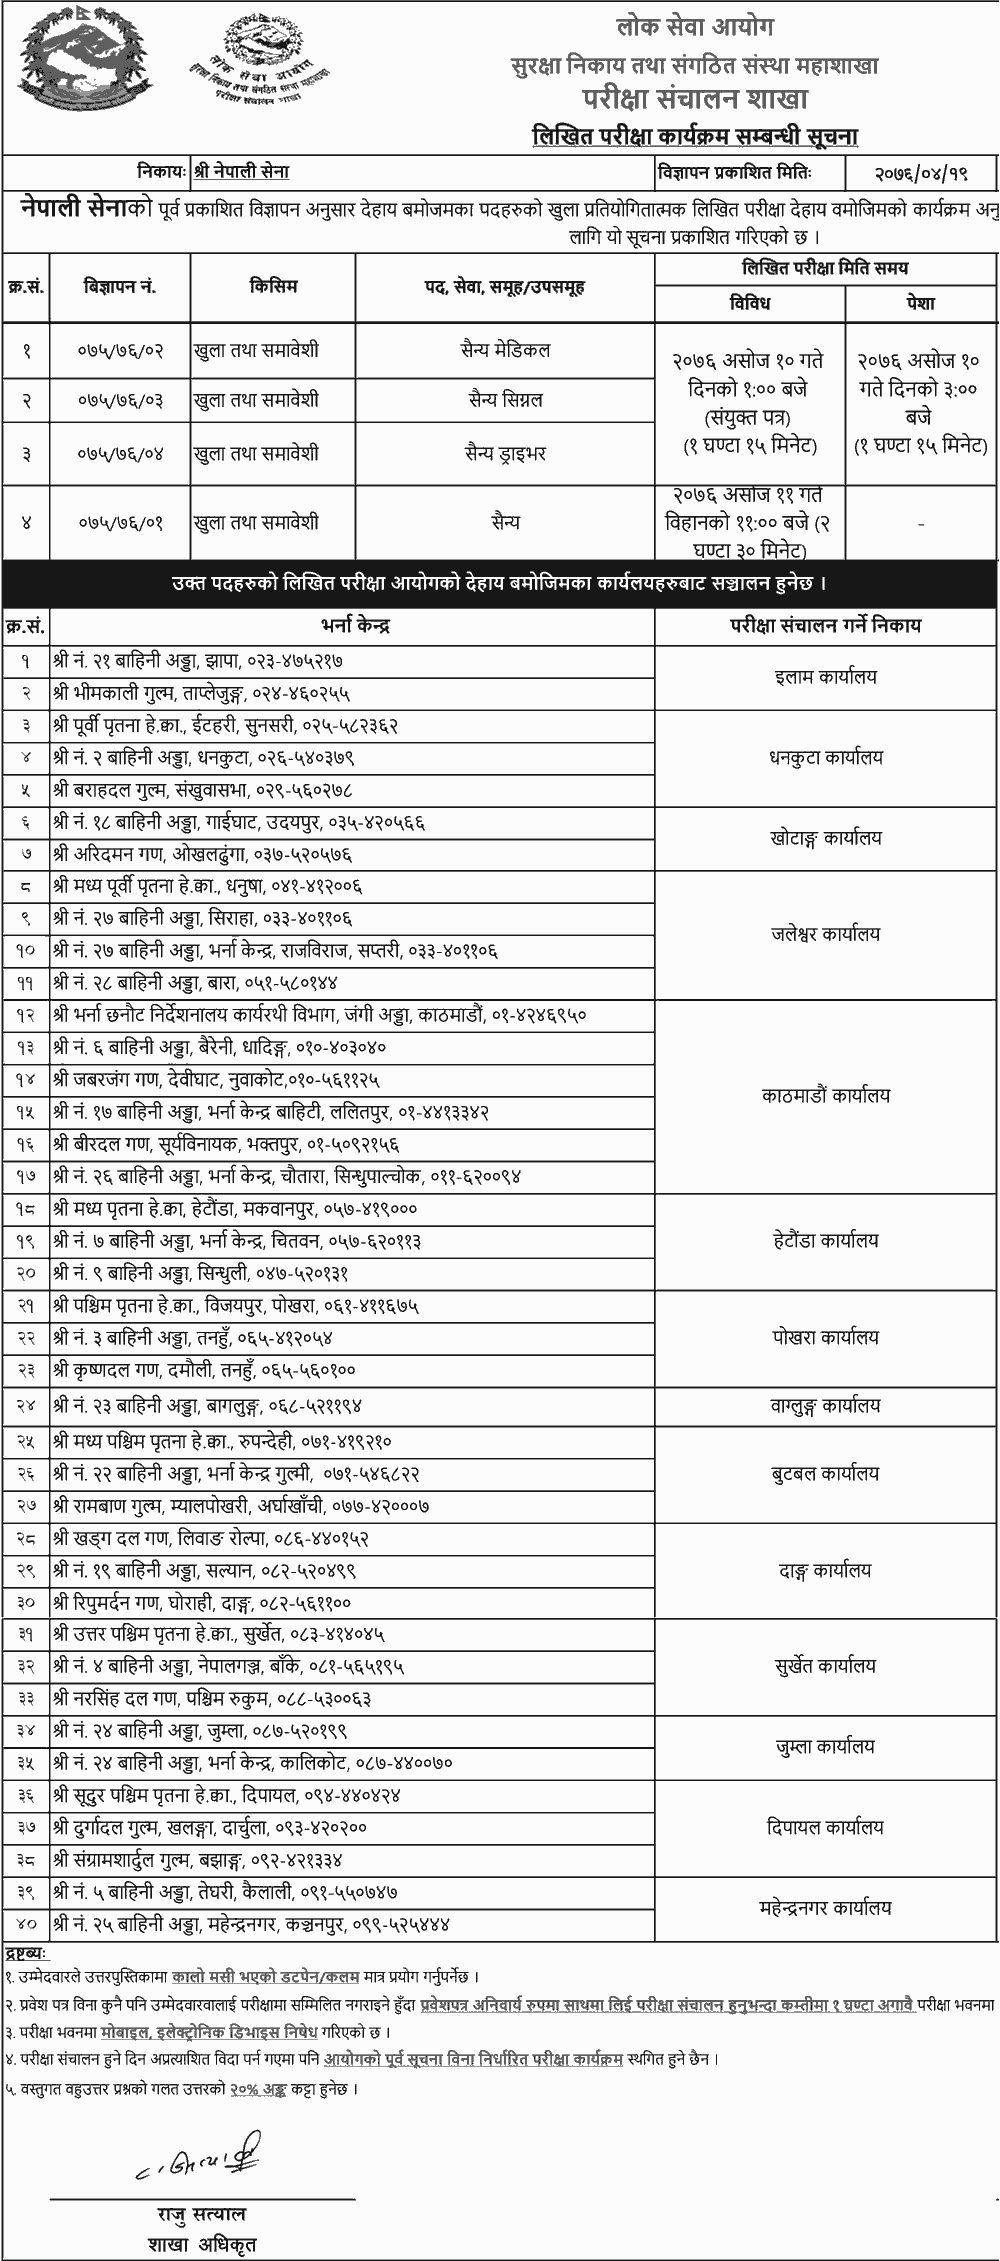 Nepal Army Written Exam Routine 2076